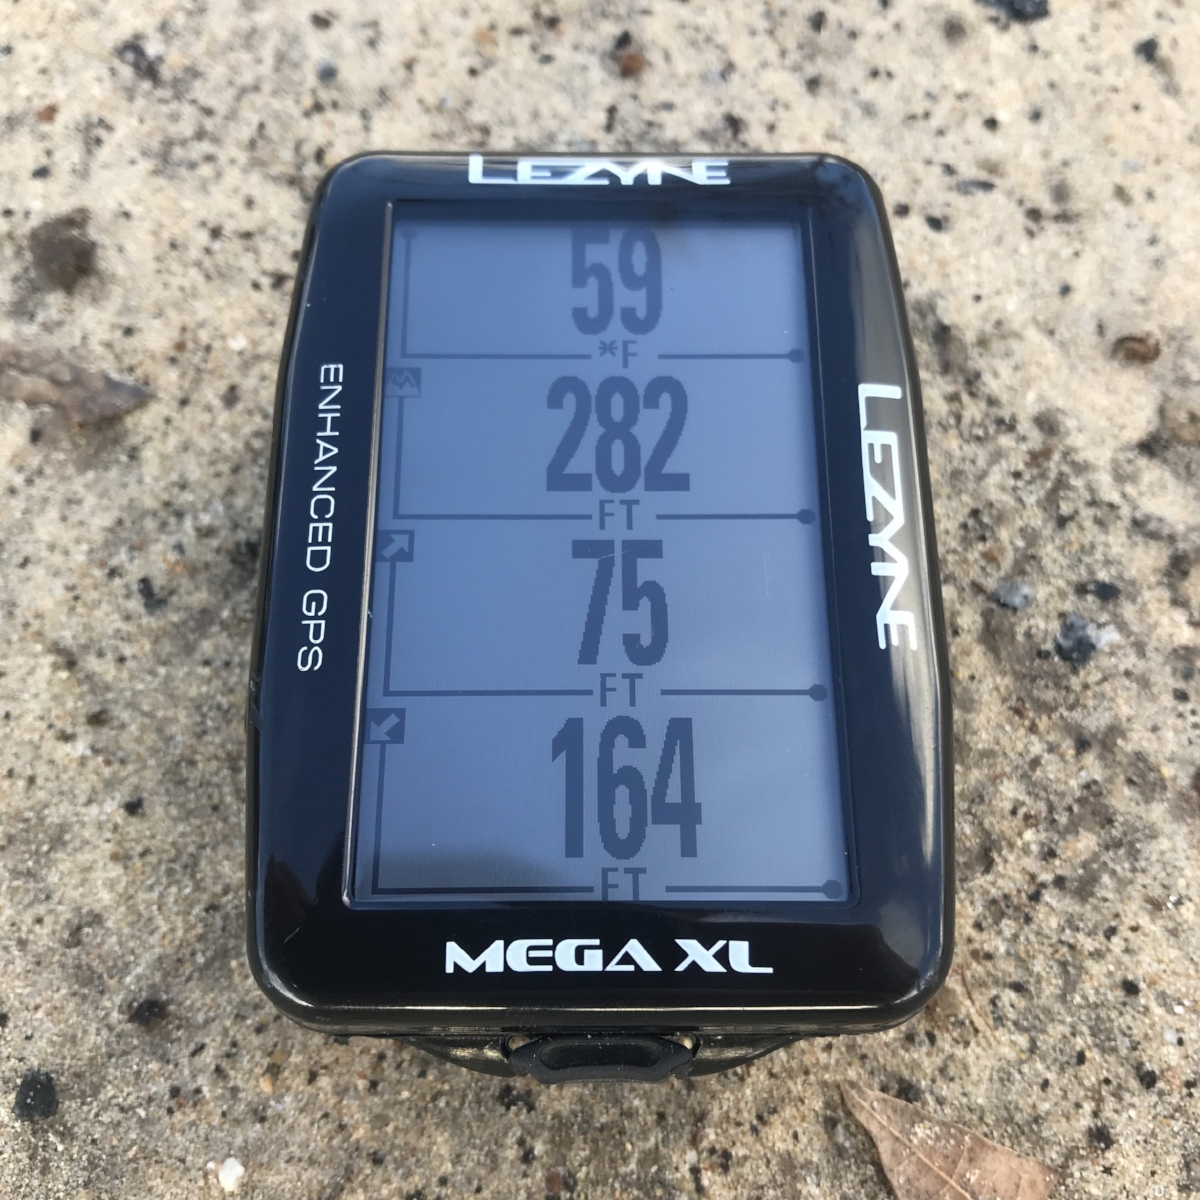  Lezyne Mega XL GPS mileage 